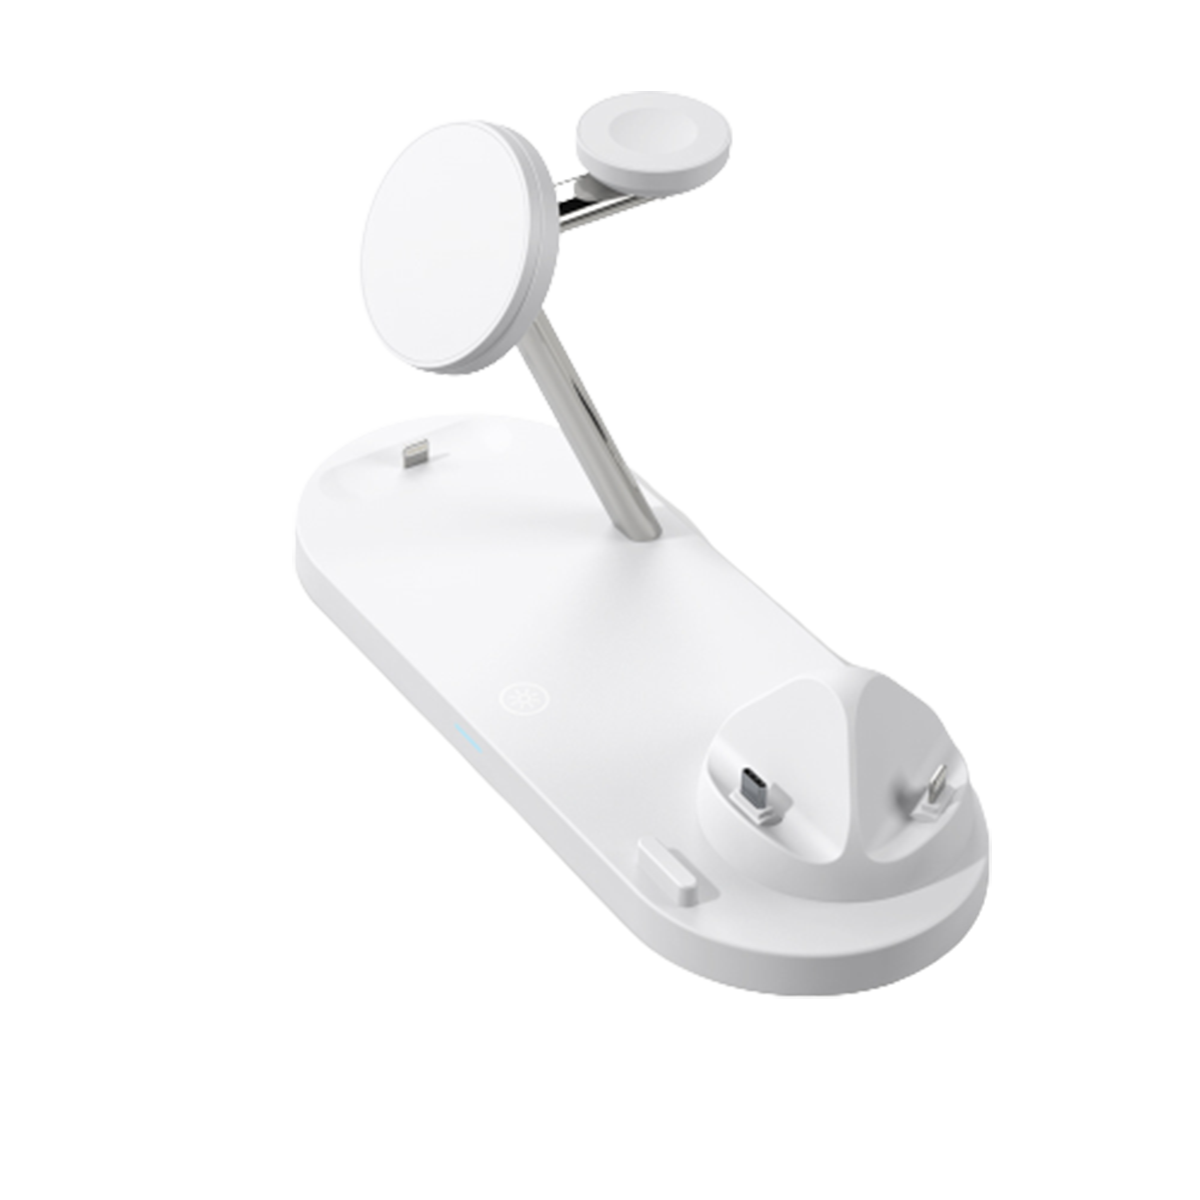 SYNTEK Drahtloses Ladegerät 3 in Ladegerät drahtloses Handy xiaomi, Kopfhörerhalter Uhr Apple Schwarz für Multifunktion 1 Ladegerät